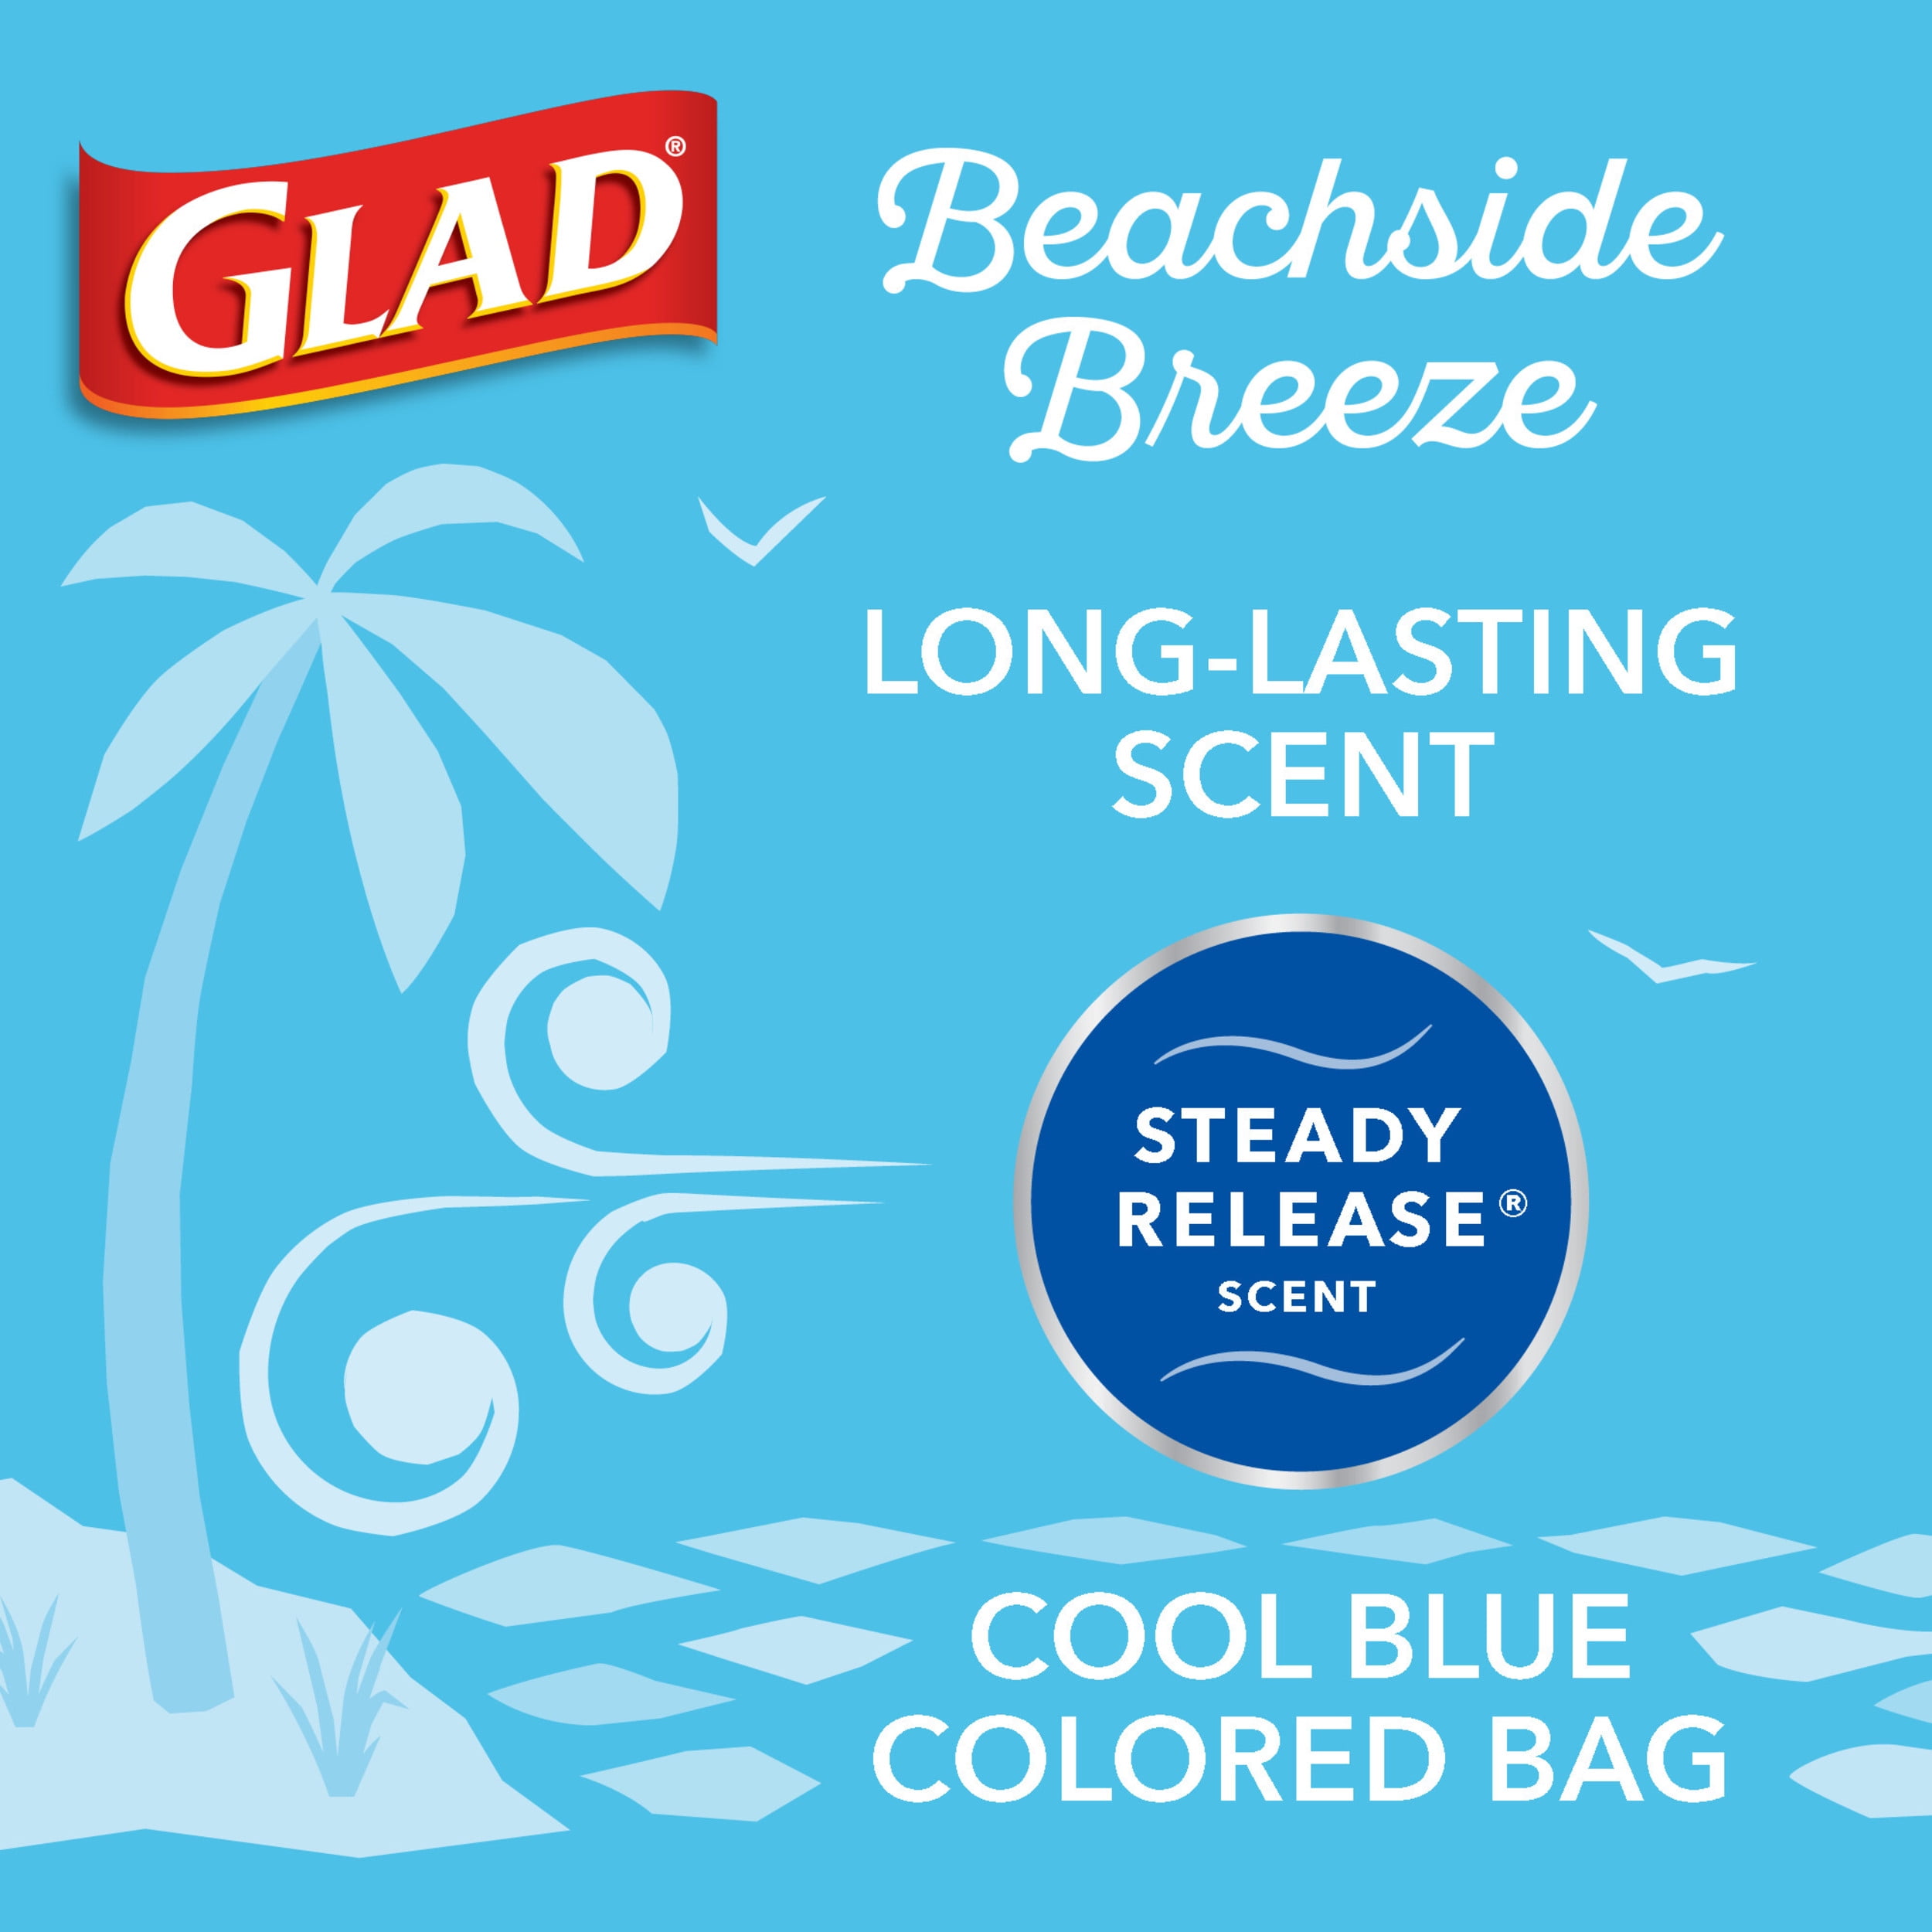 Glad Small Twist-Tie Trash Bags, Febreze Fresh Clean Scent - 4 Gal - 1 –  Contarmarket